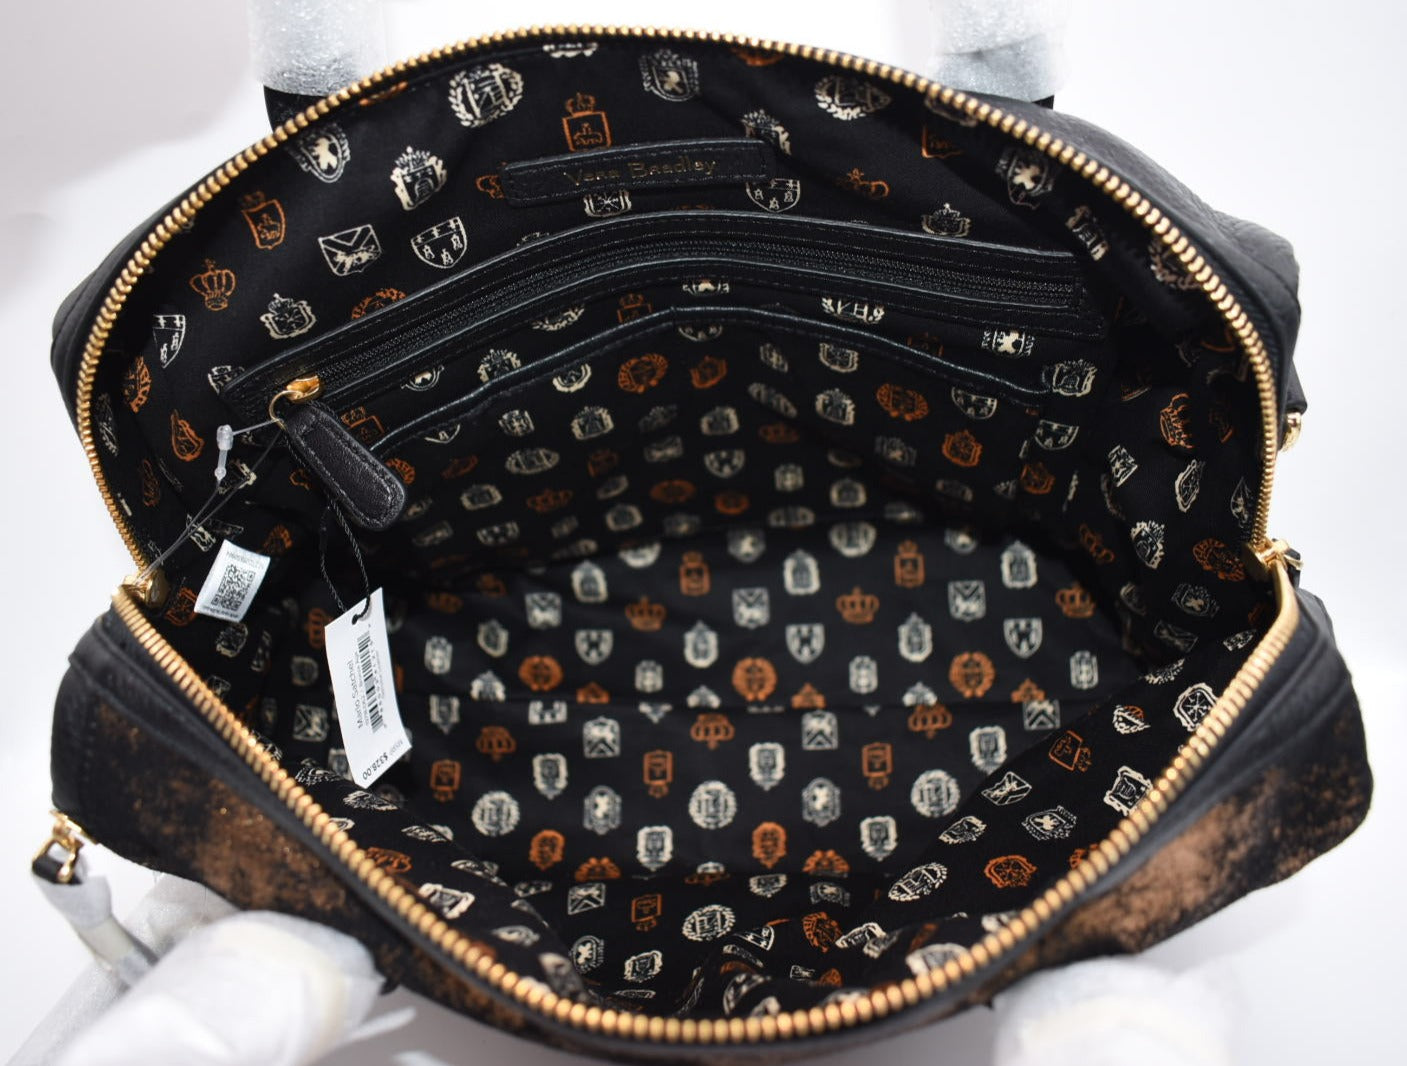 Vera Bradley Marlo Leather Satchel Bag in "Bronze Age" Pattern